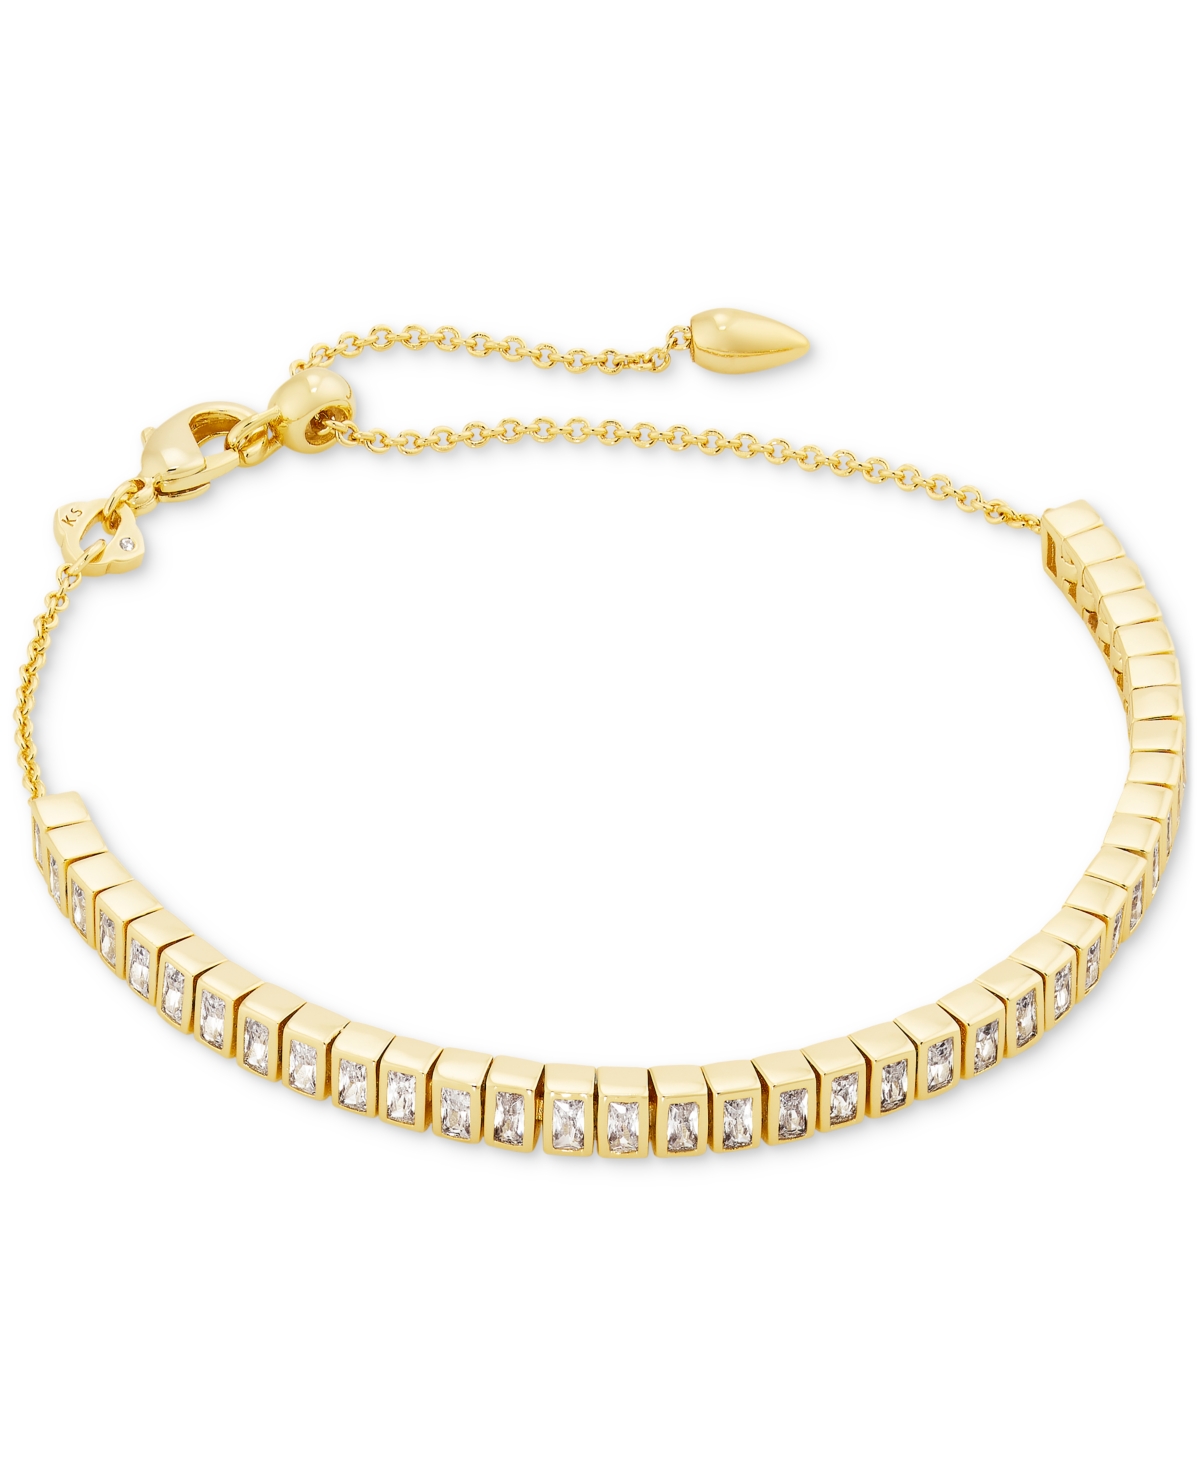 Kendra Scott 14k Gold-plated Baguette Crystal Tennis-style Slider Bracelet In White Cz